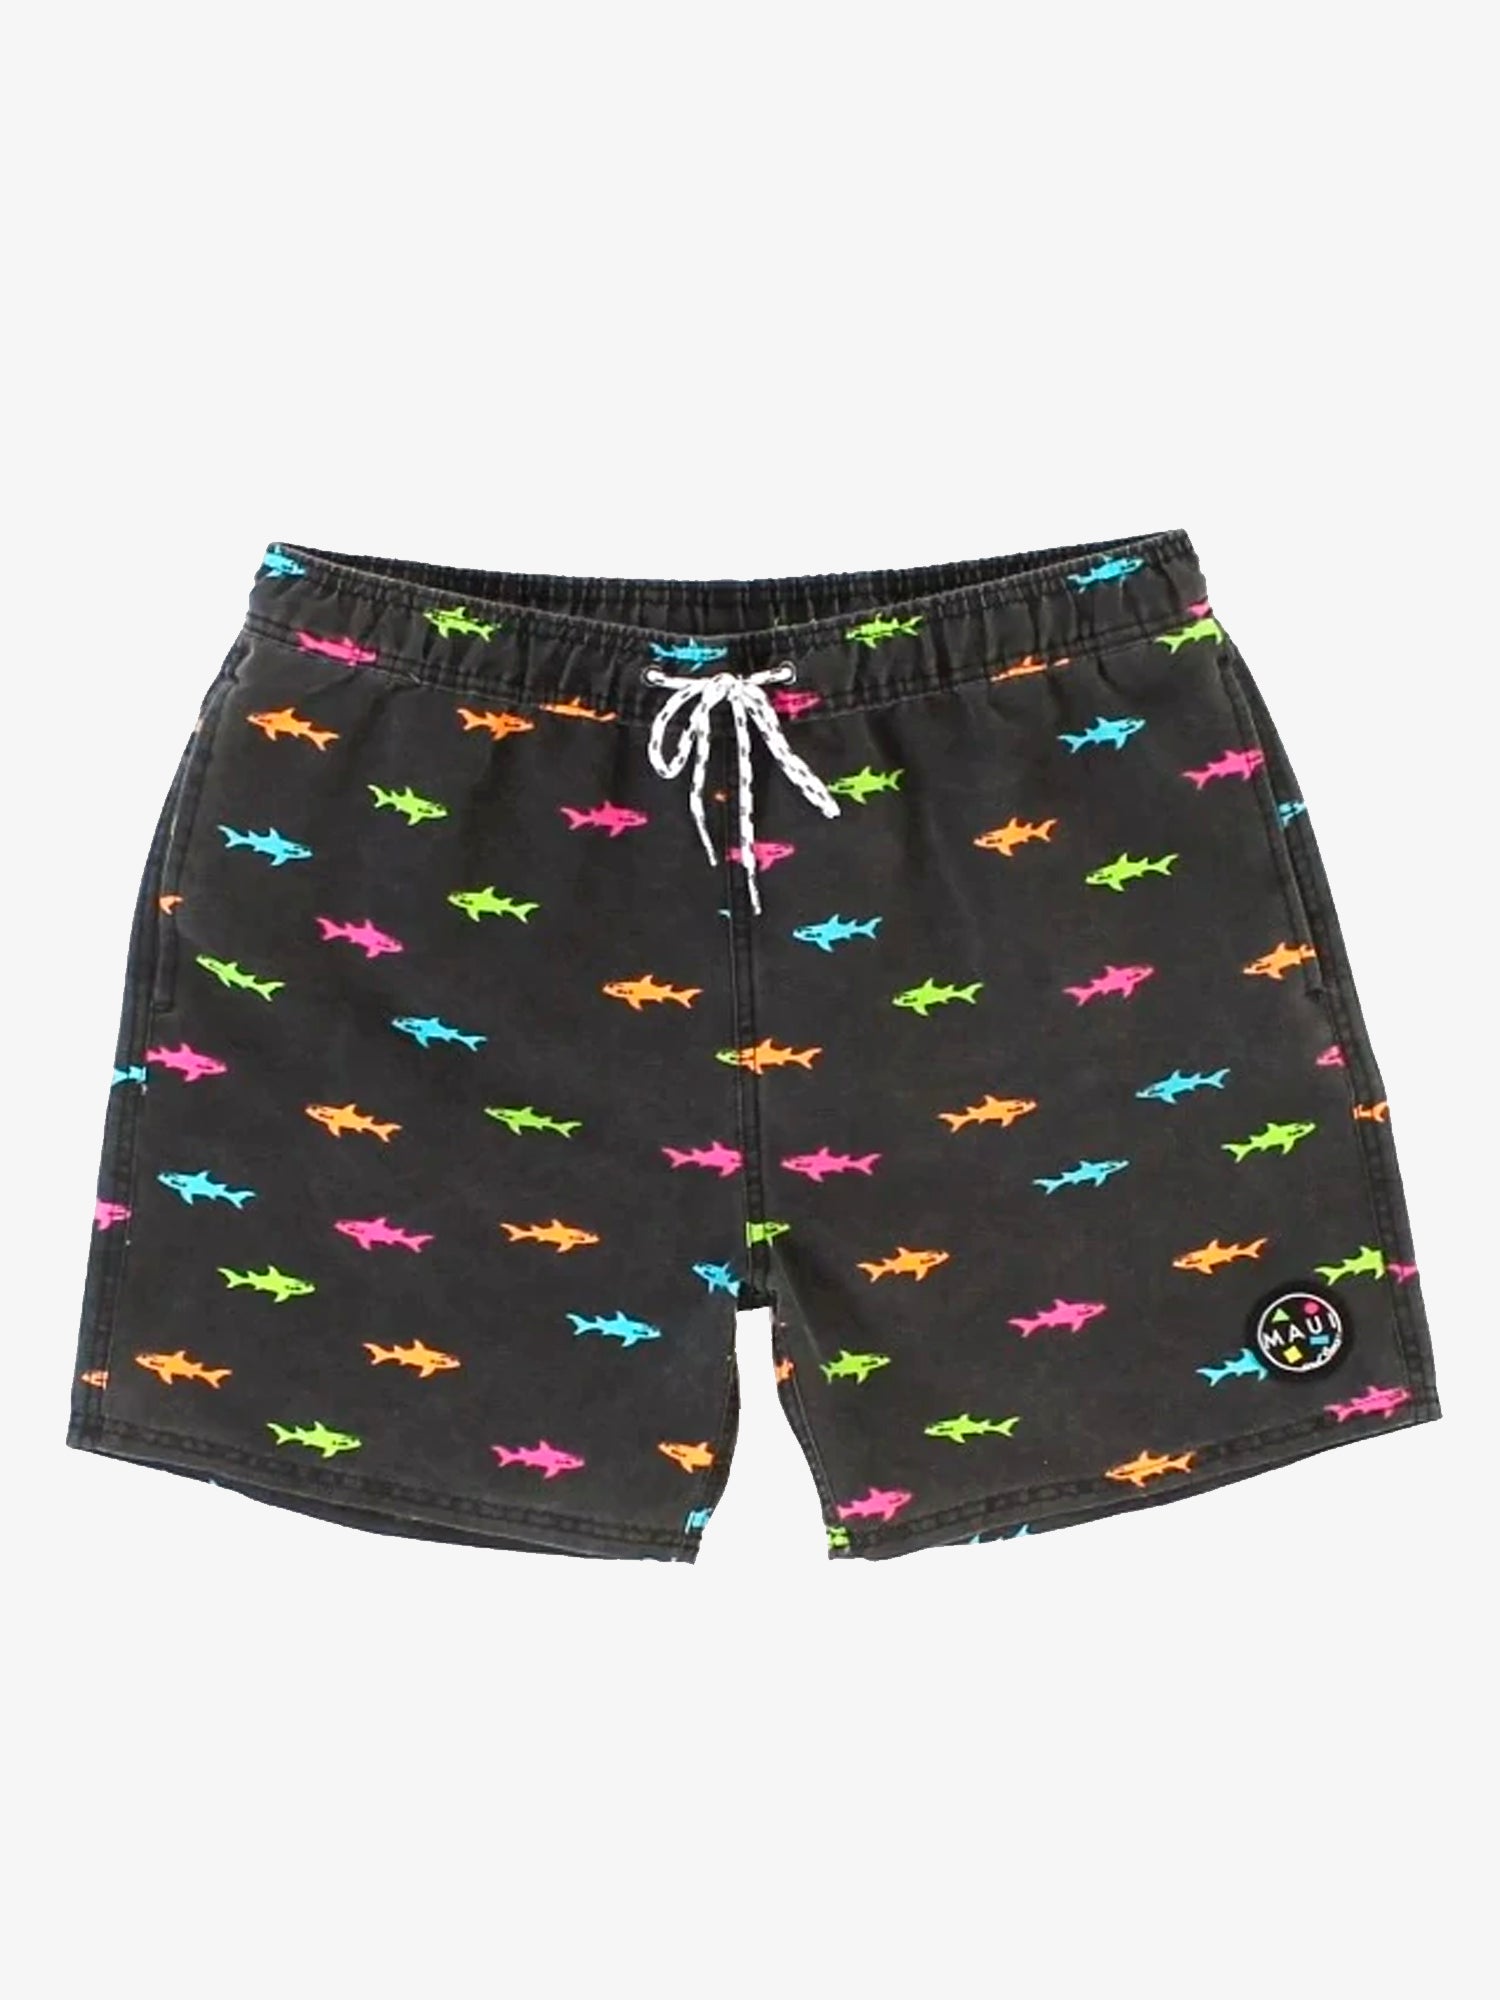 Neon Chubby Pool Shorts